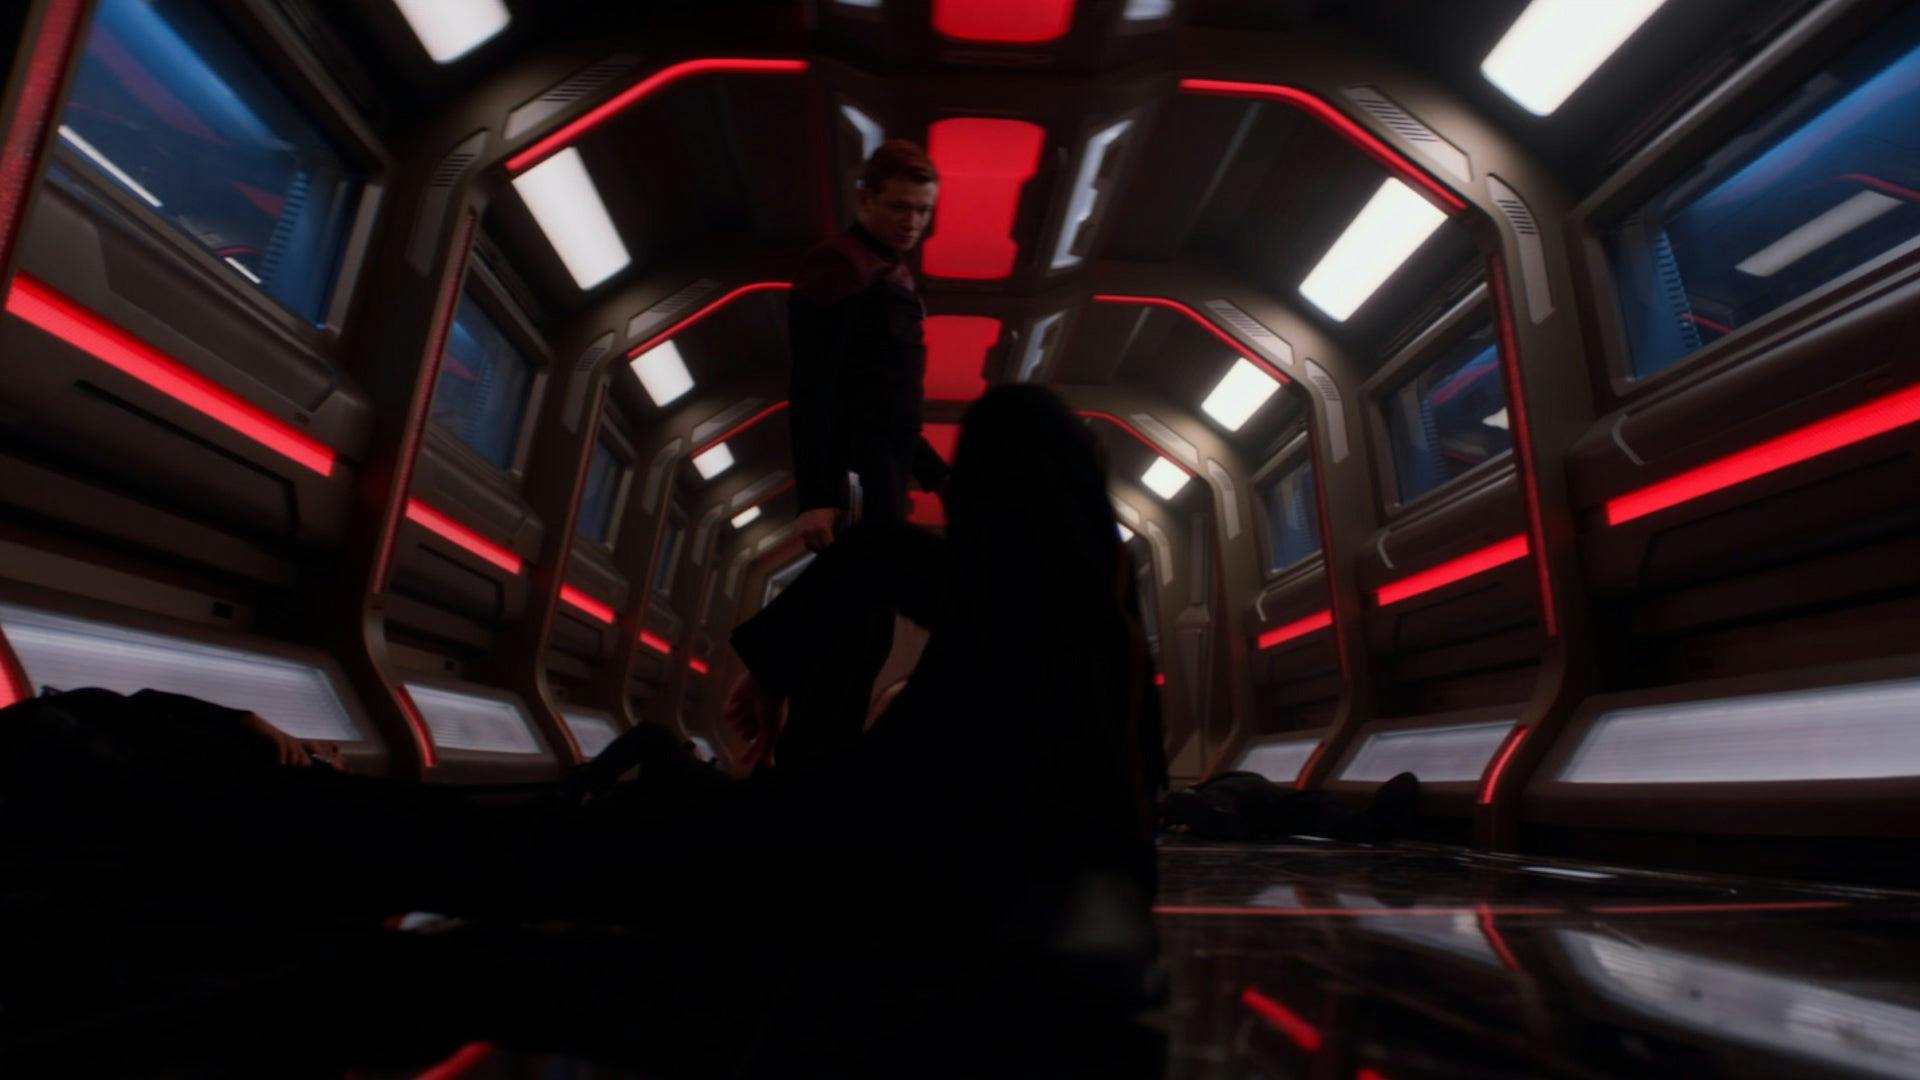 Jack Crusher surrounded by downed Starfleet officers in the Titan corridor in Star Trek: Picard